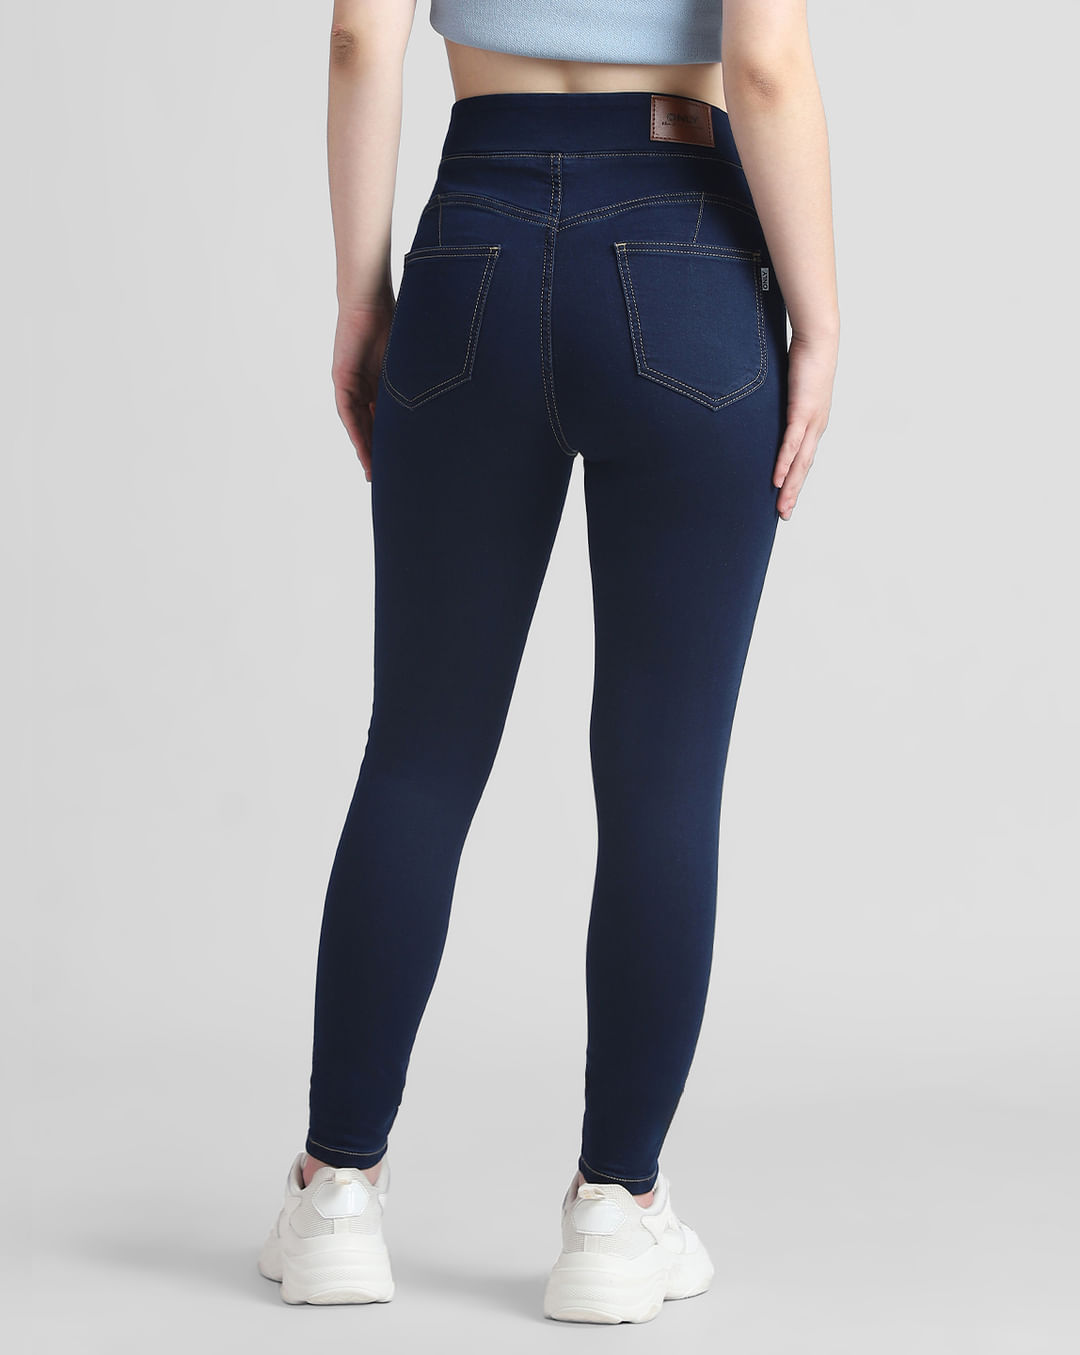 AOSUAI S-XXL Women Lined Winter Jegging Jeans Slim Fashion